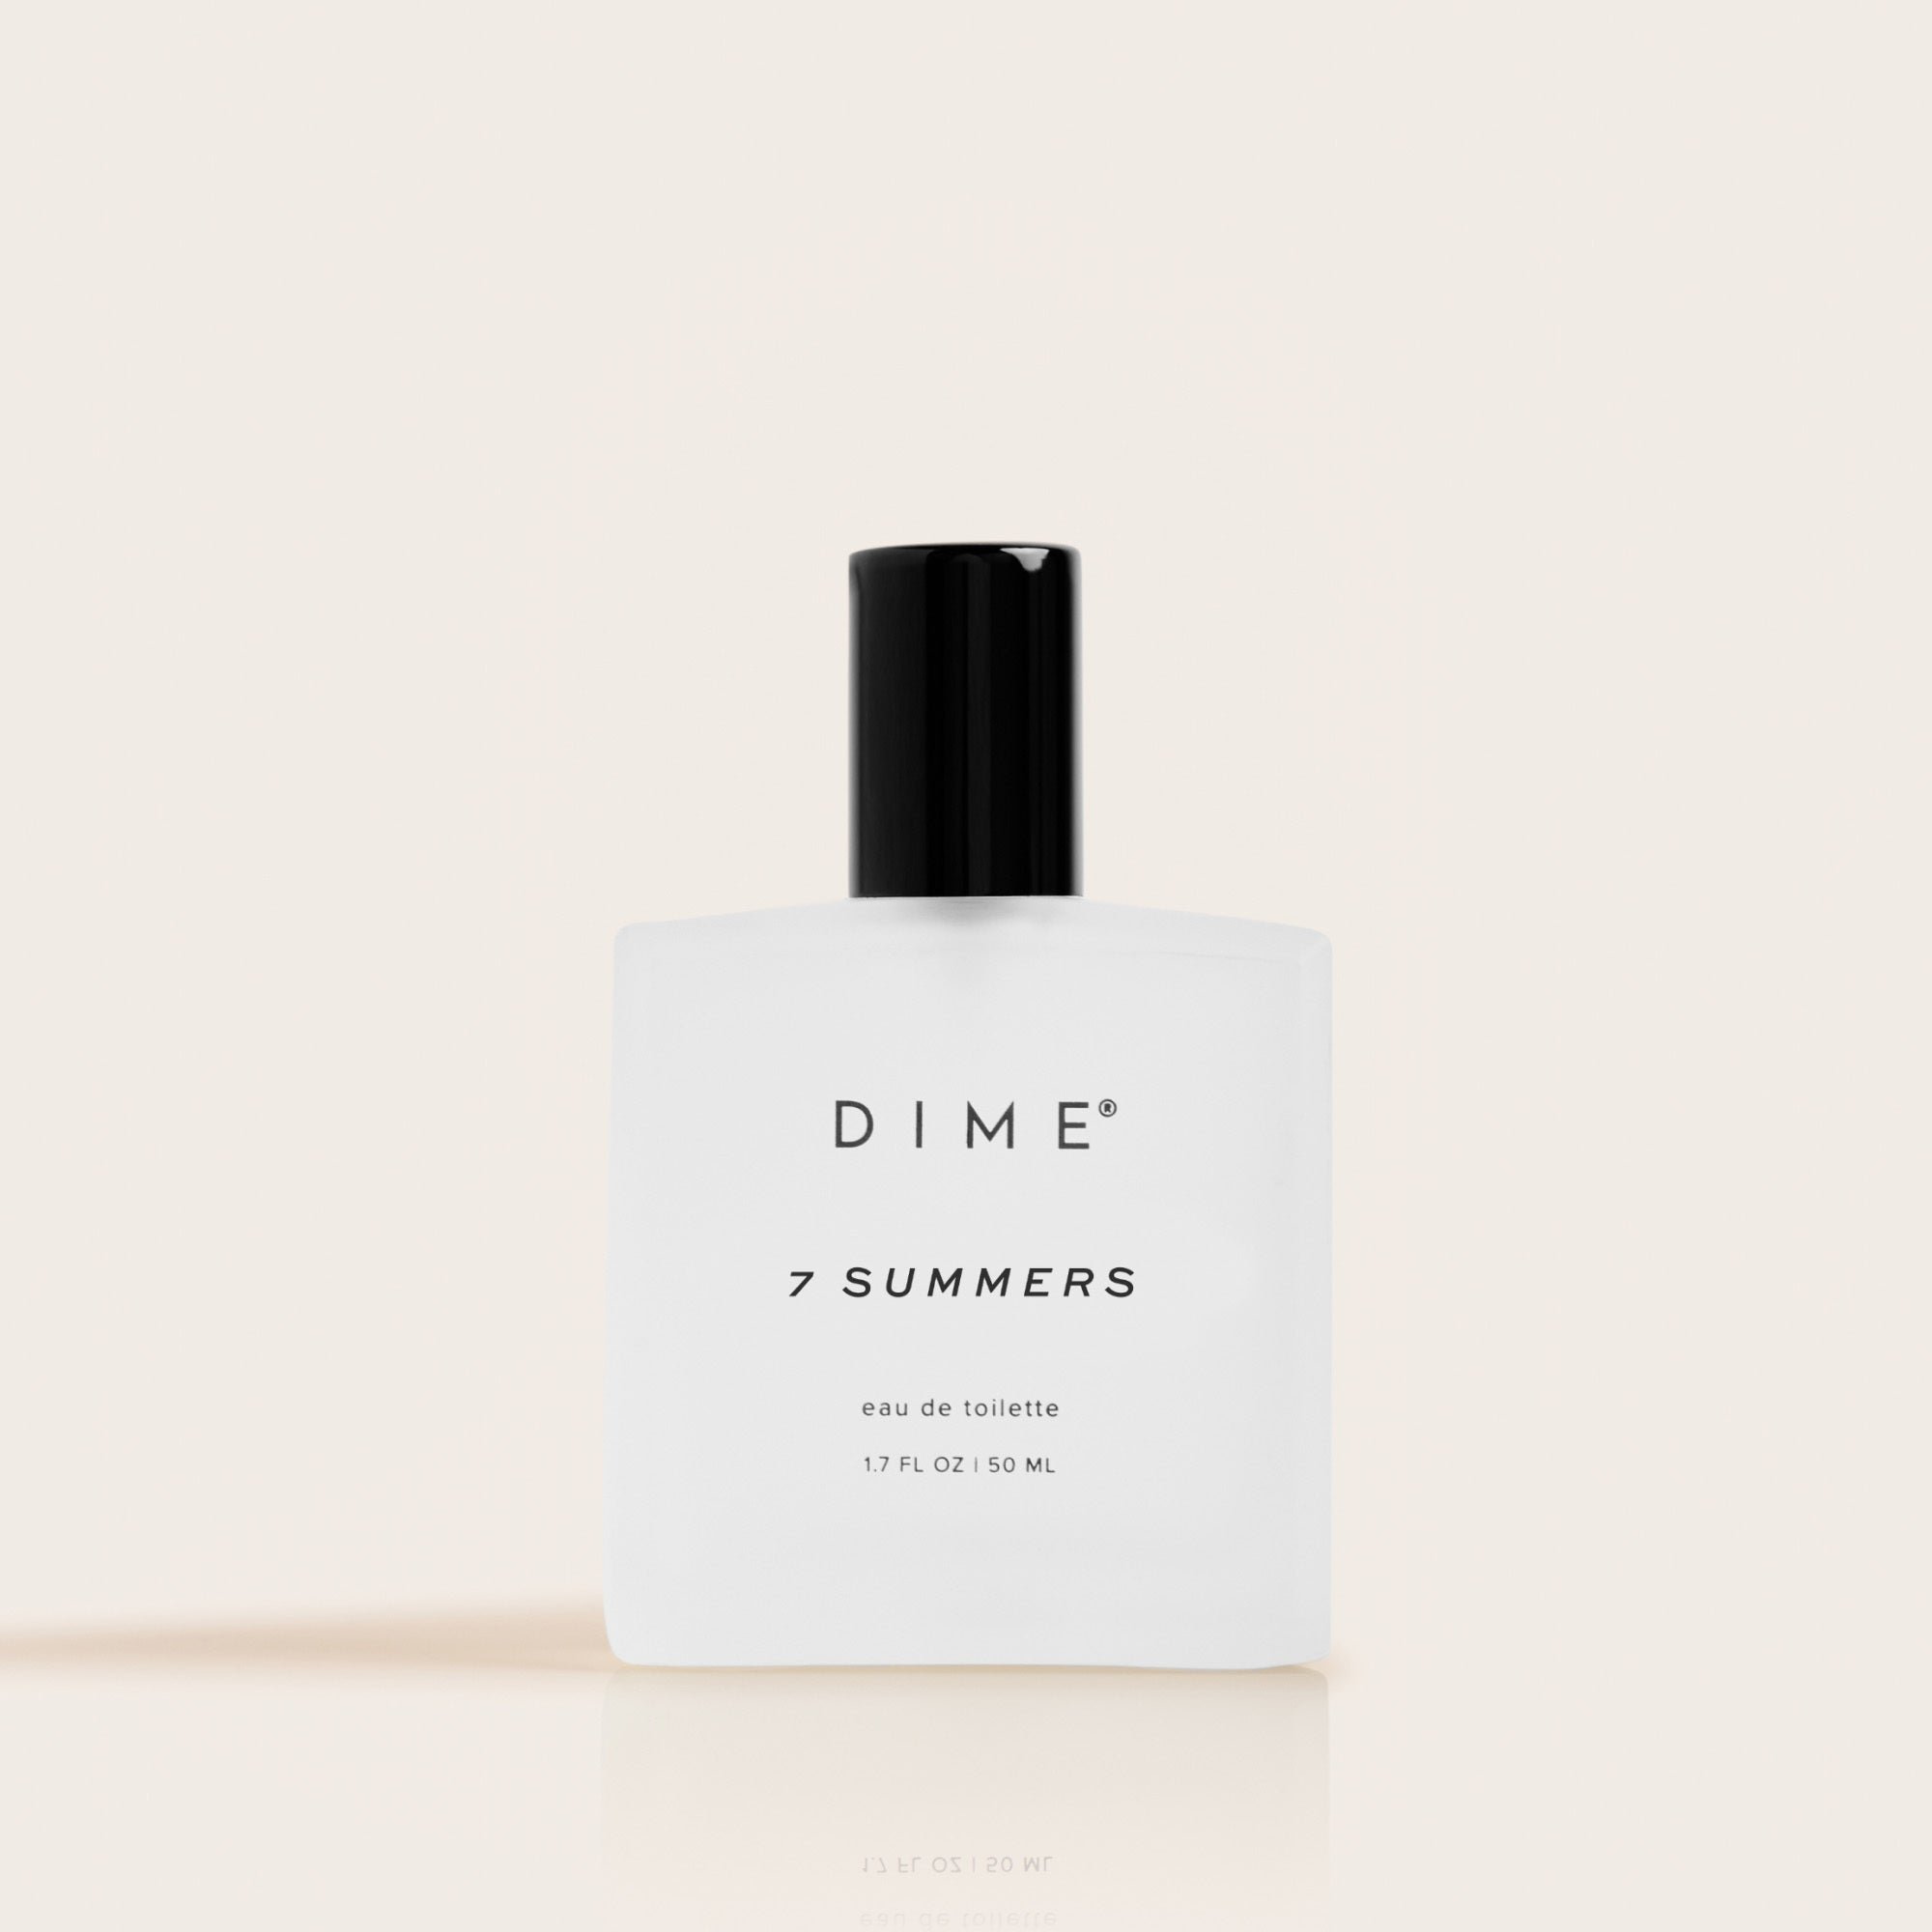 7 summers perfume